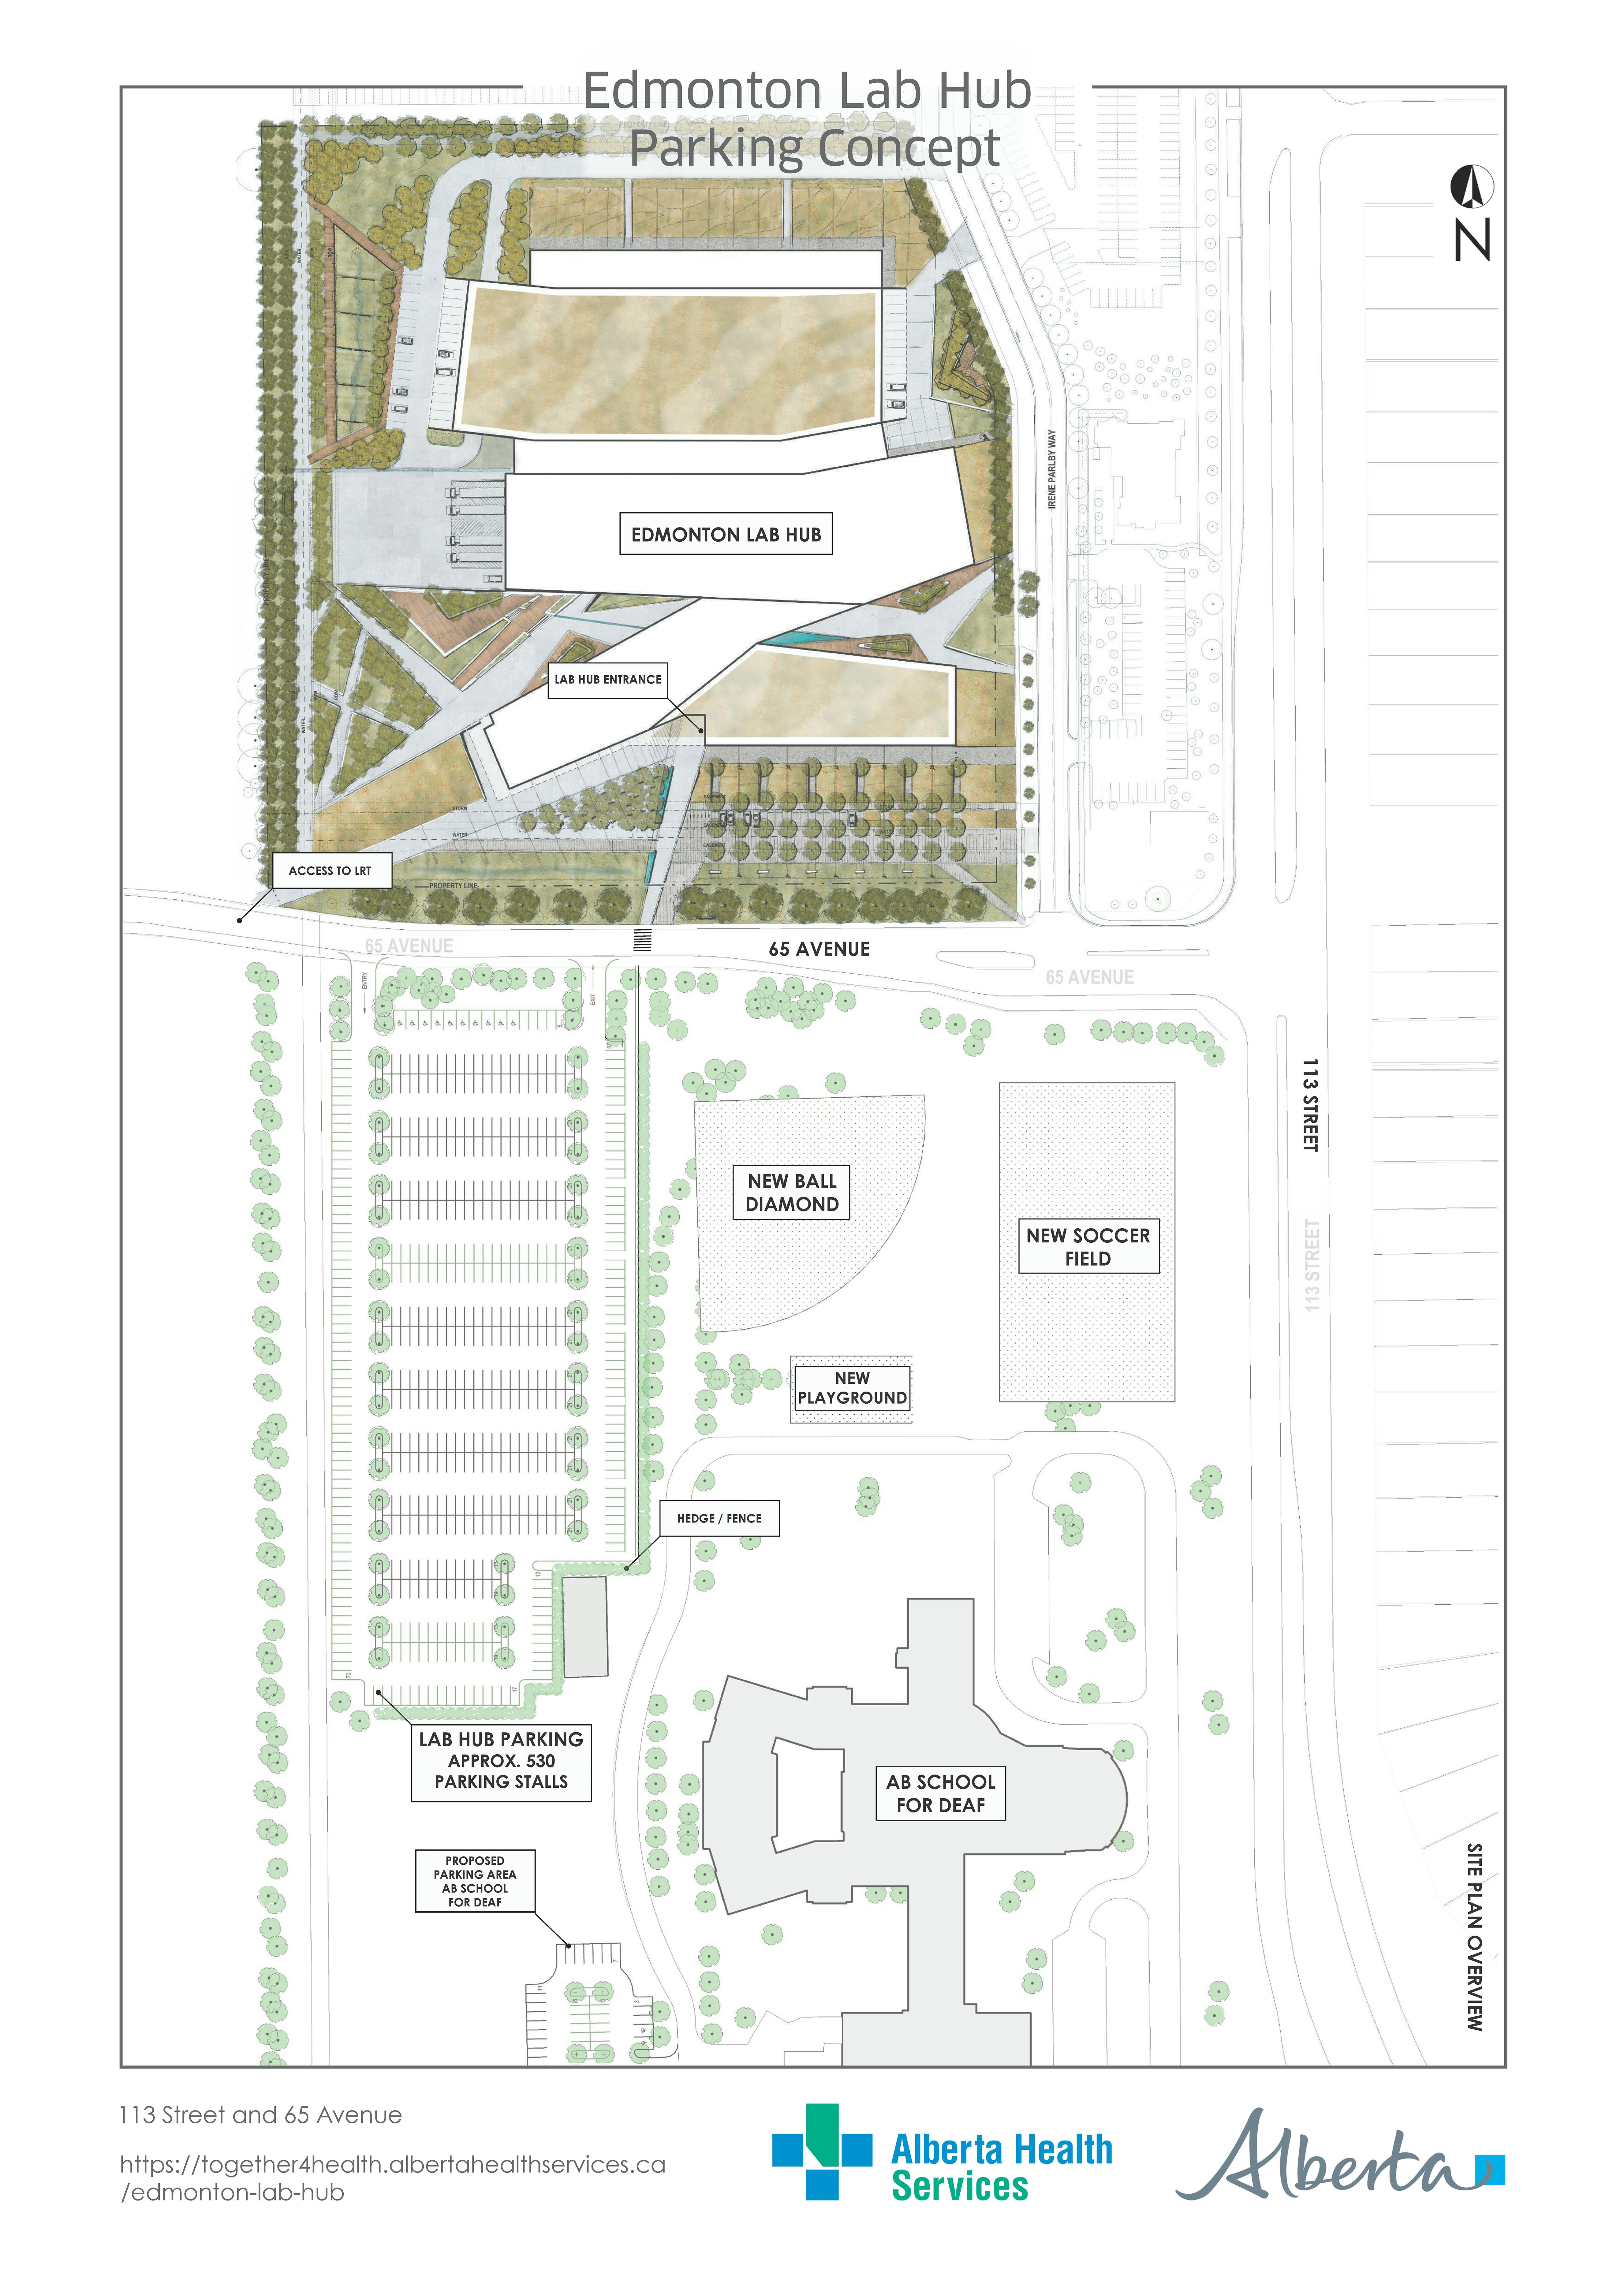 Edmonton Lab Hub Parking Concept